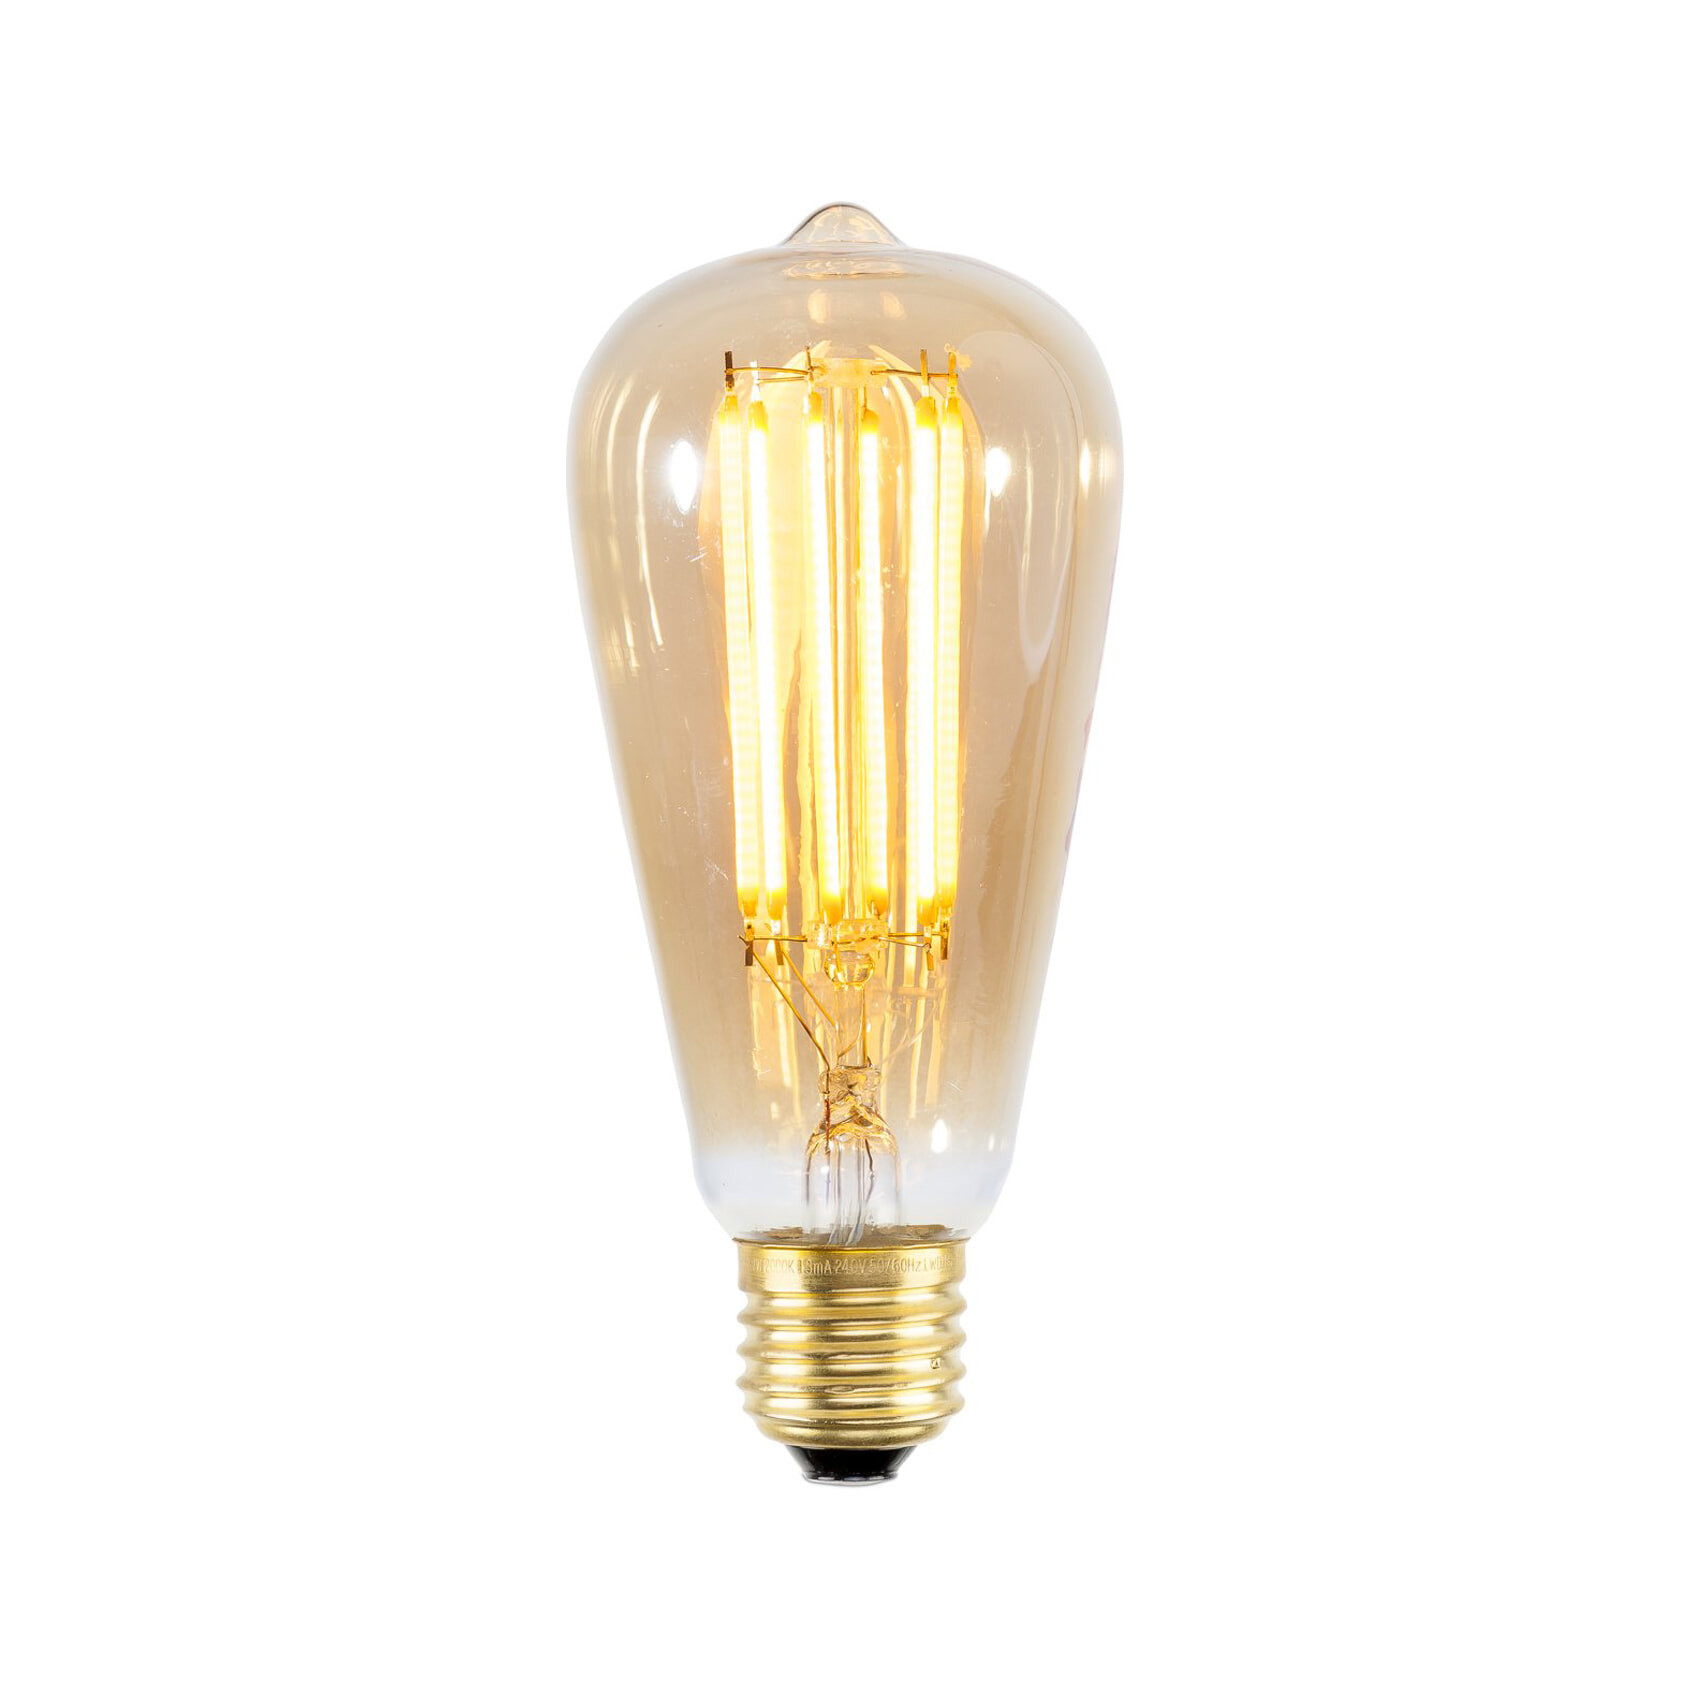 Kooldraadlamp Peer E27 LED 3,5W goldline 14cm, dimbaar - Goud,Transparant